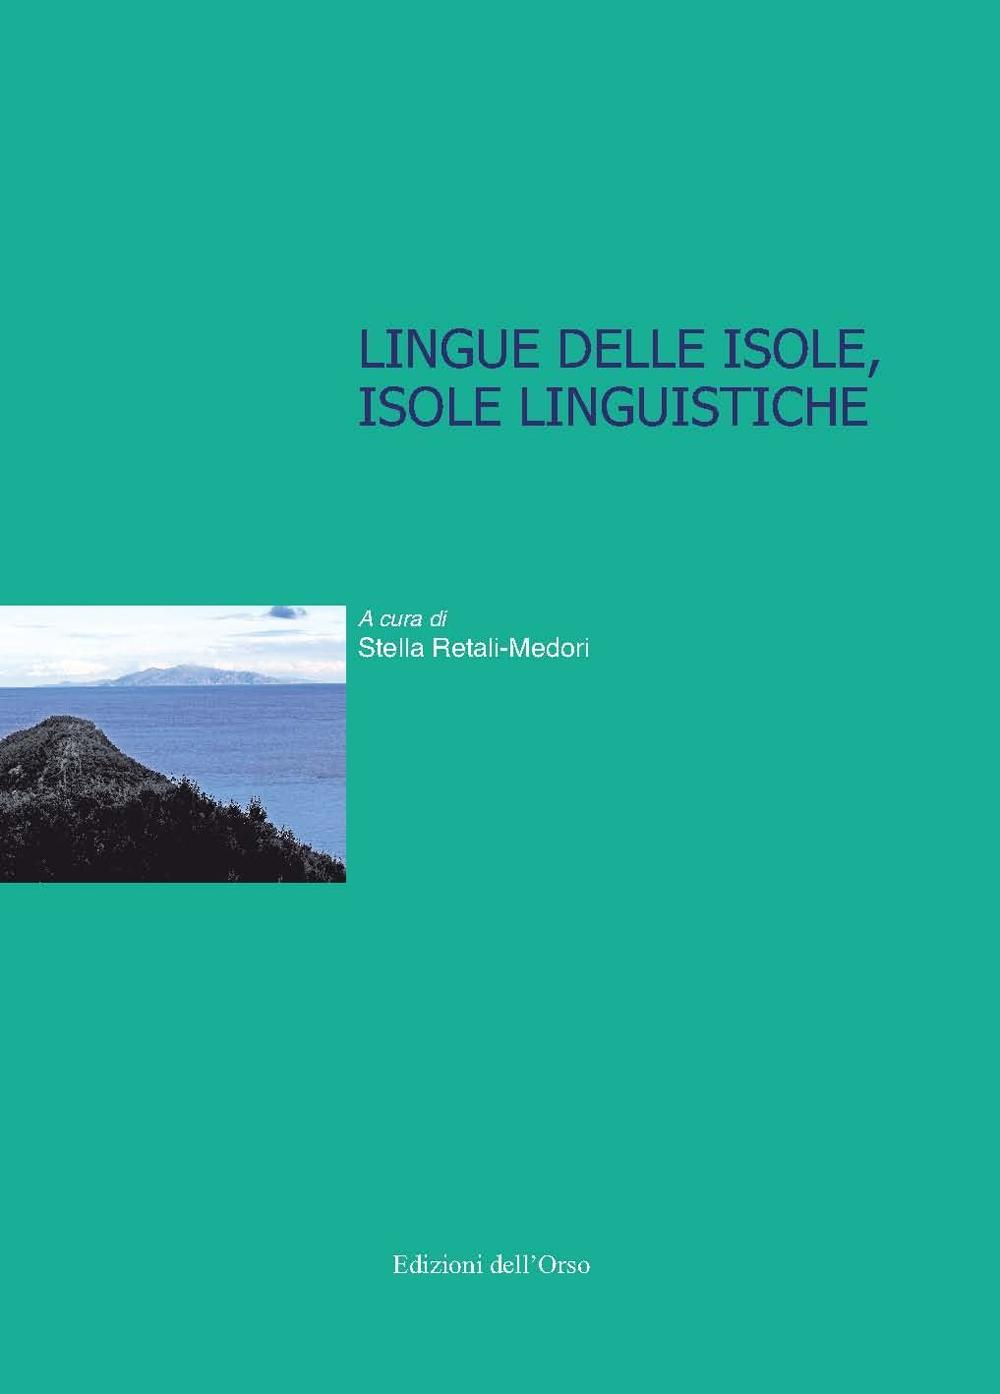 Image of Lingue delle isole, isole linguistiche